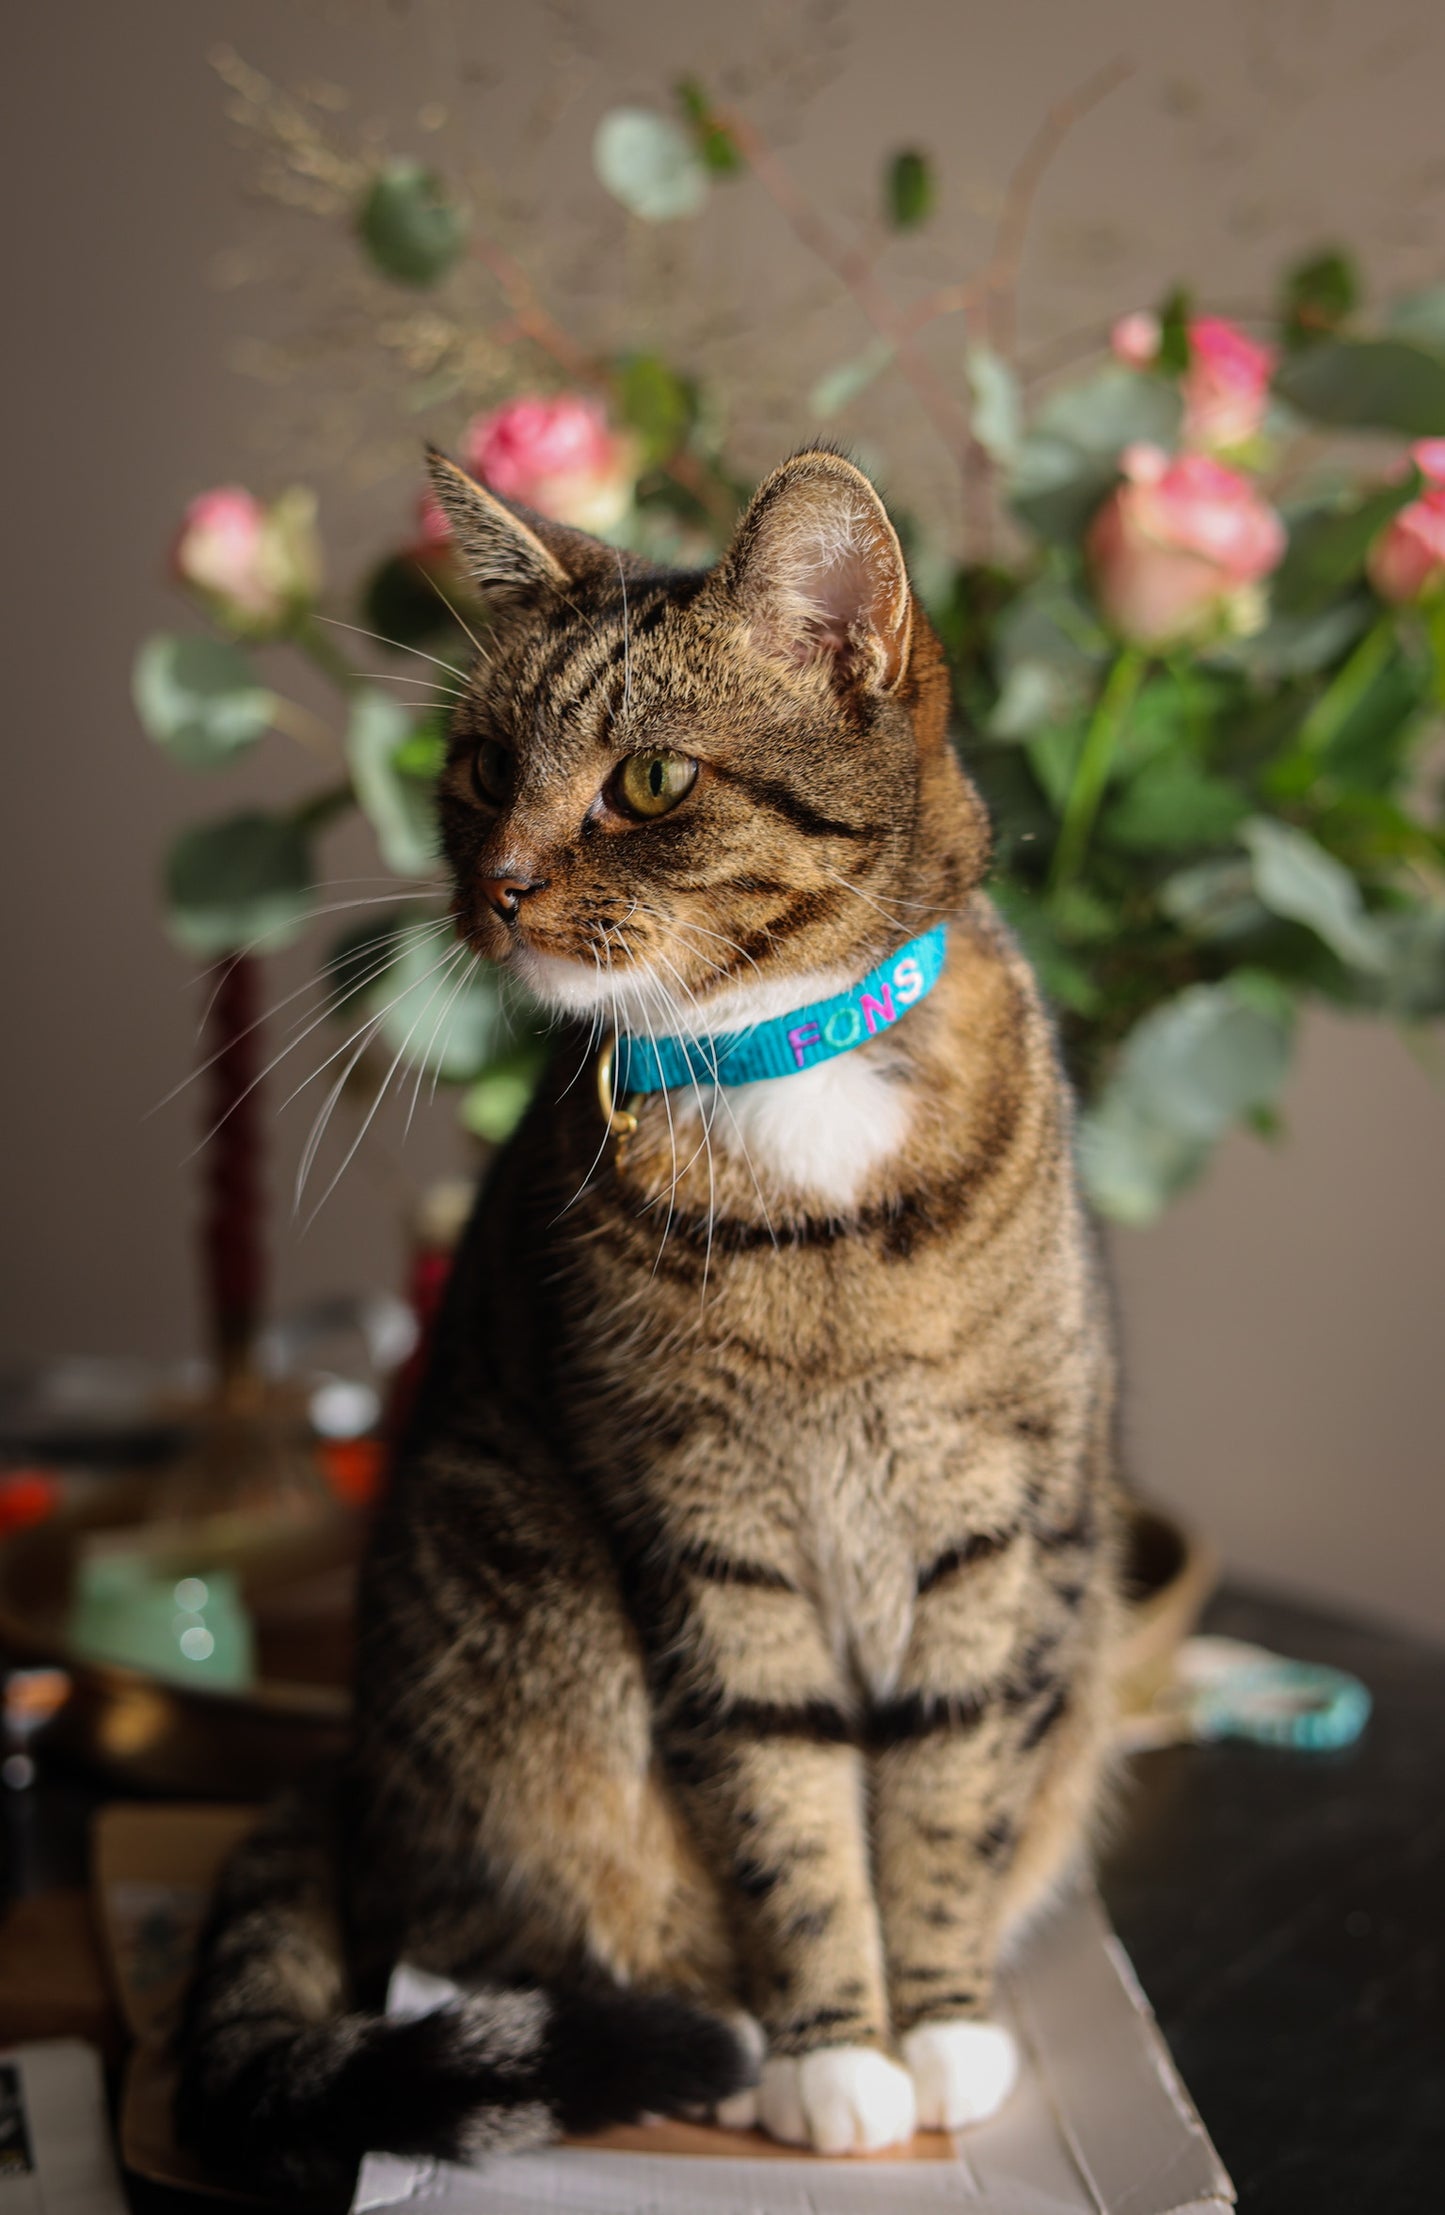 Cat collar with name - Teal